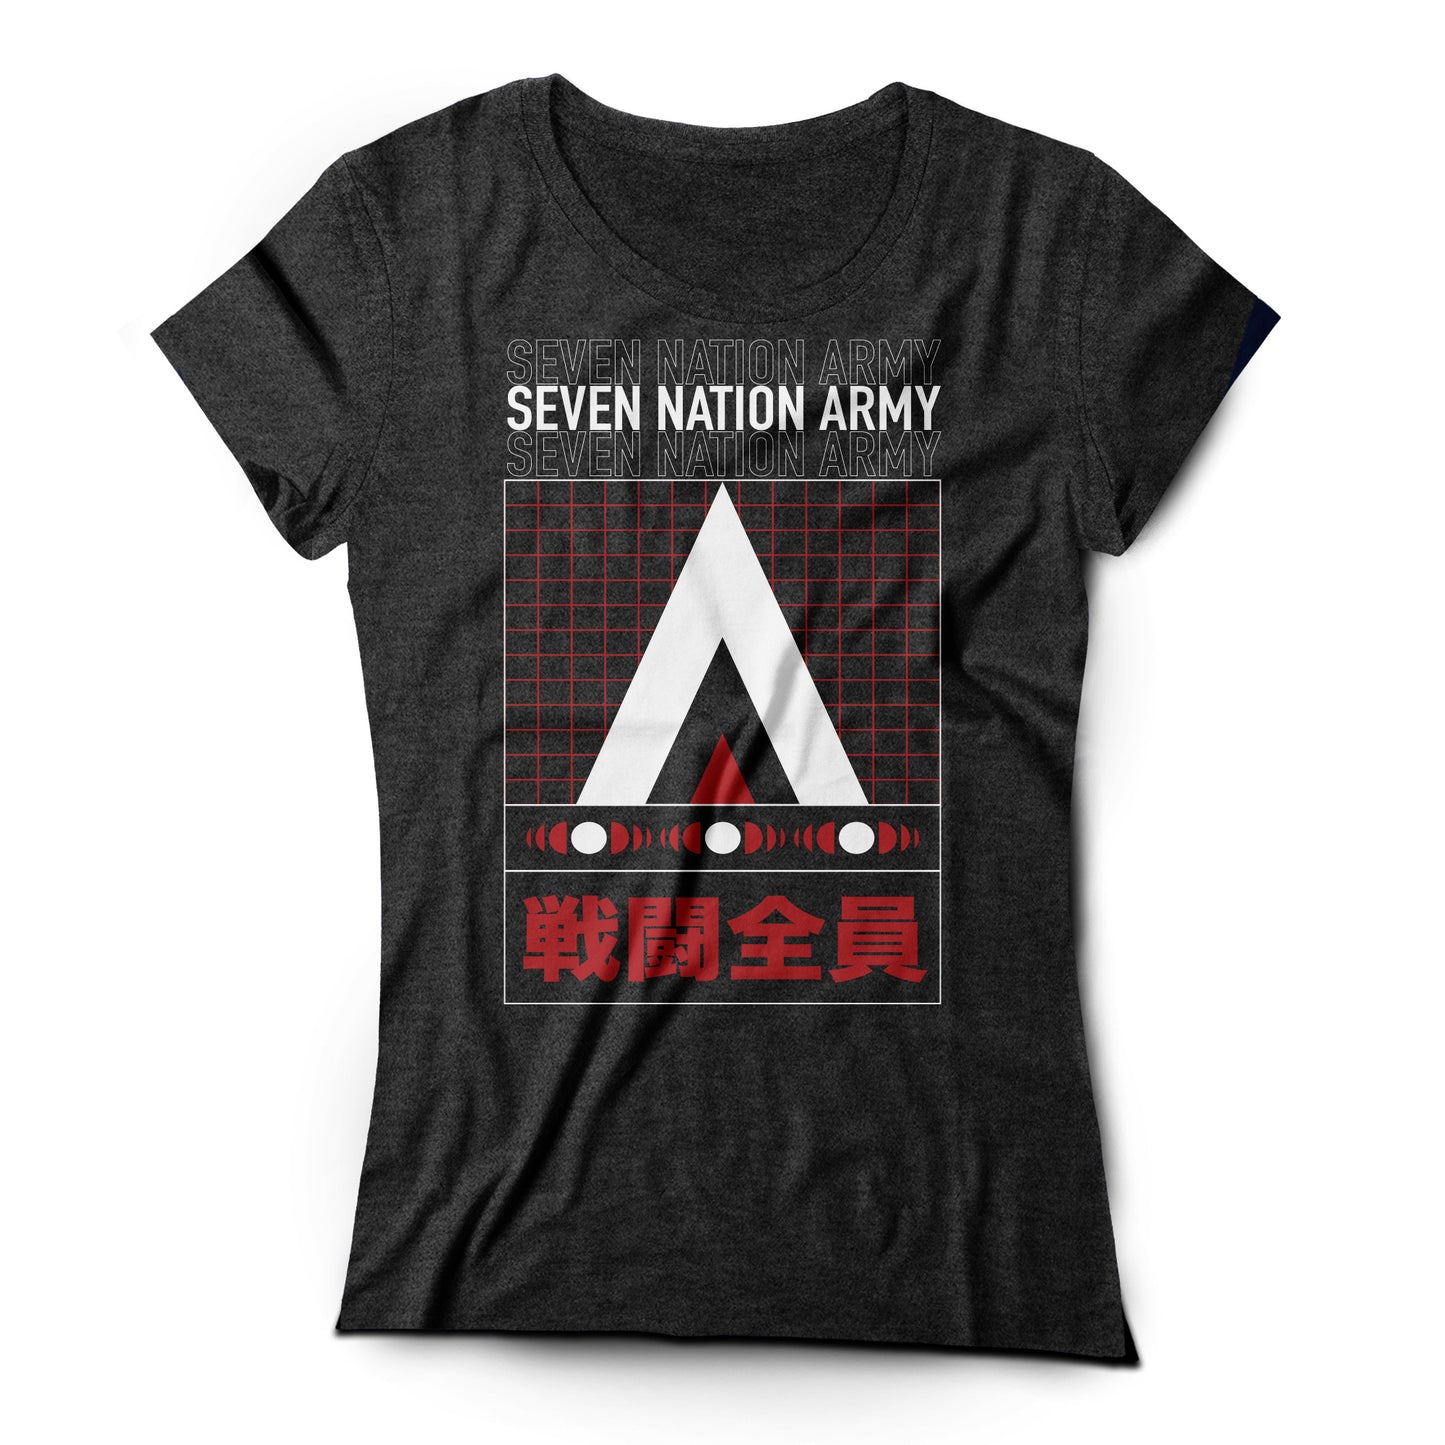 Seven Nation Army - Women's T-Shirt